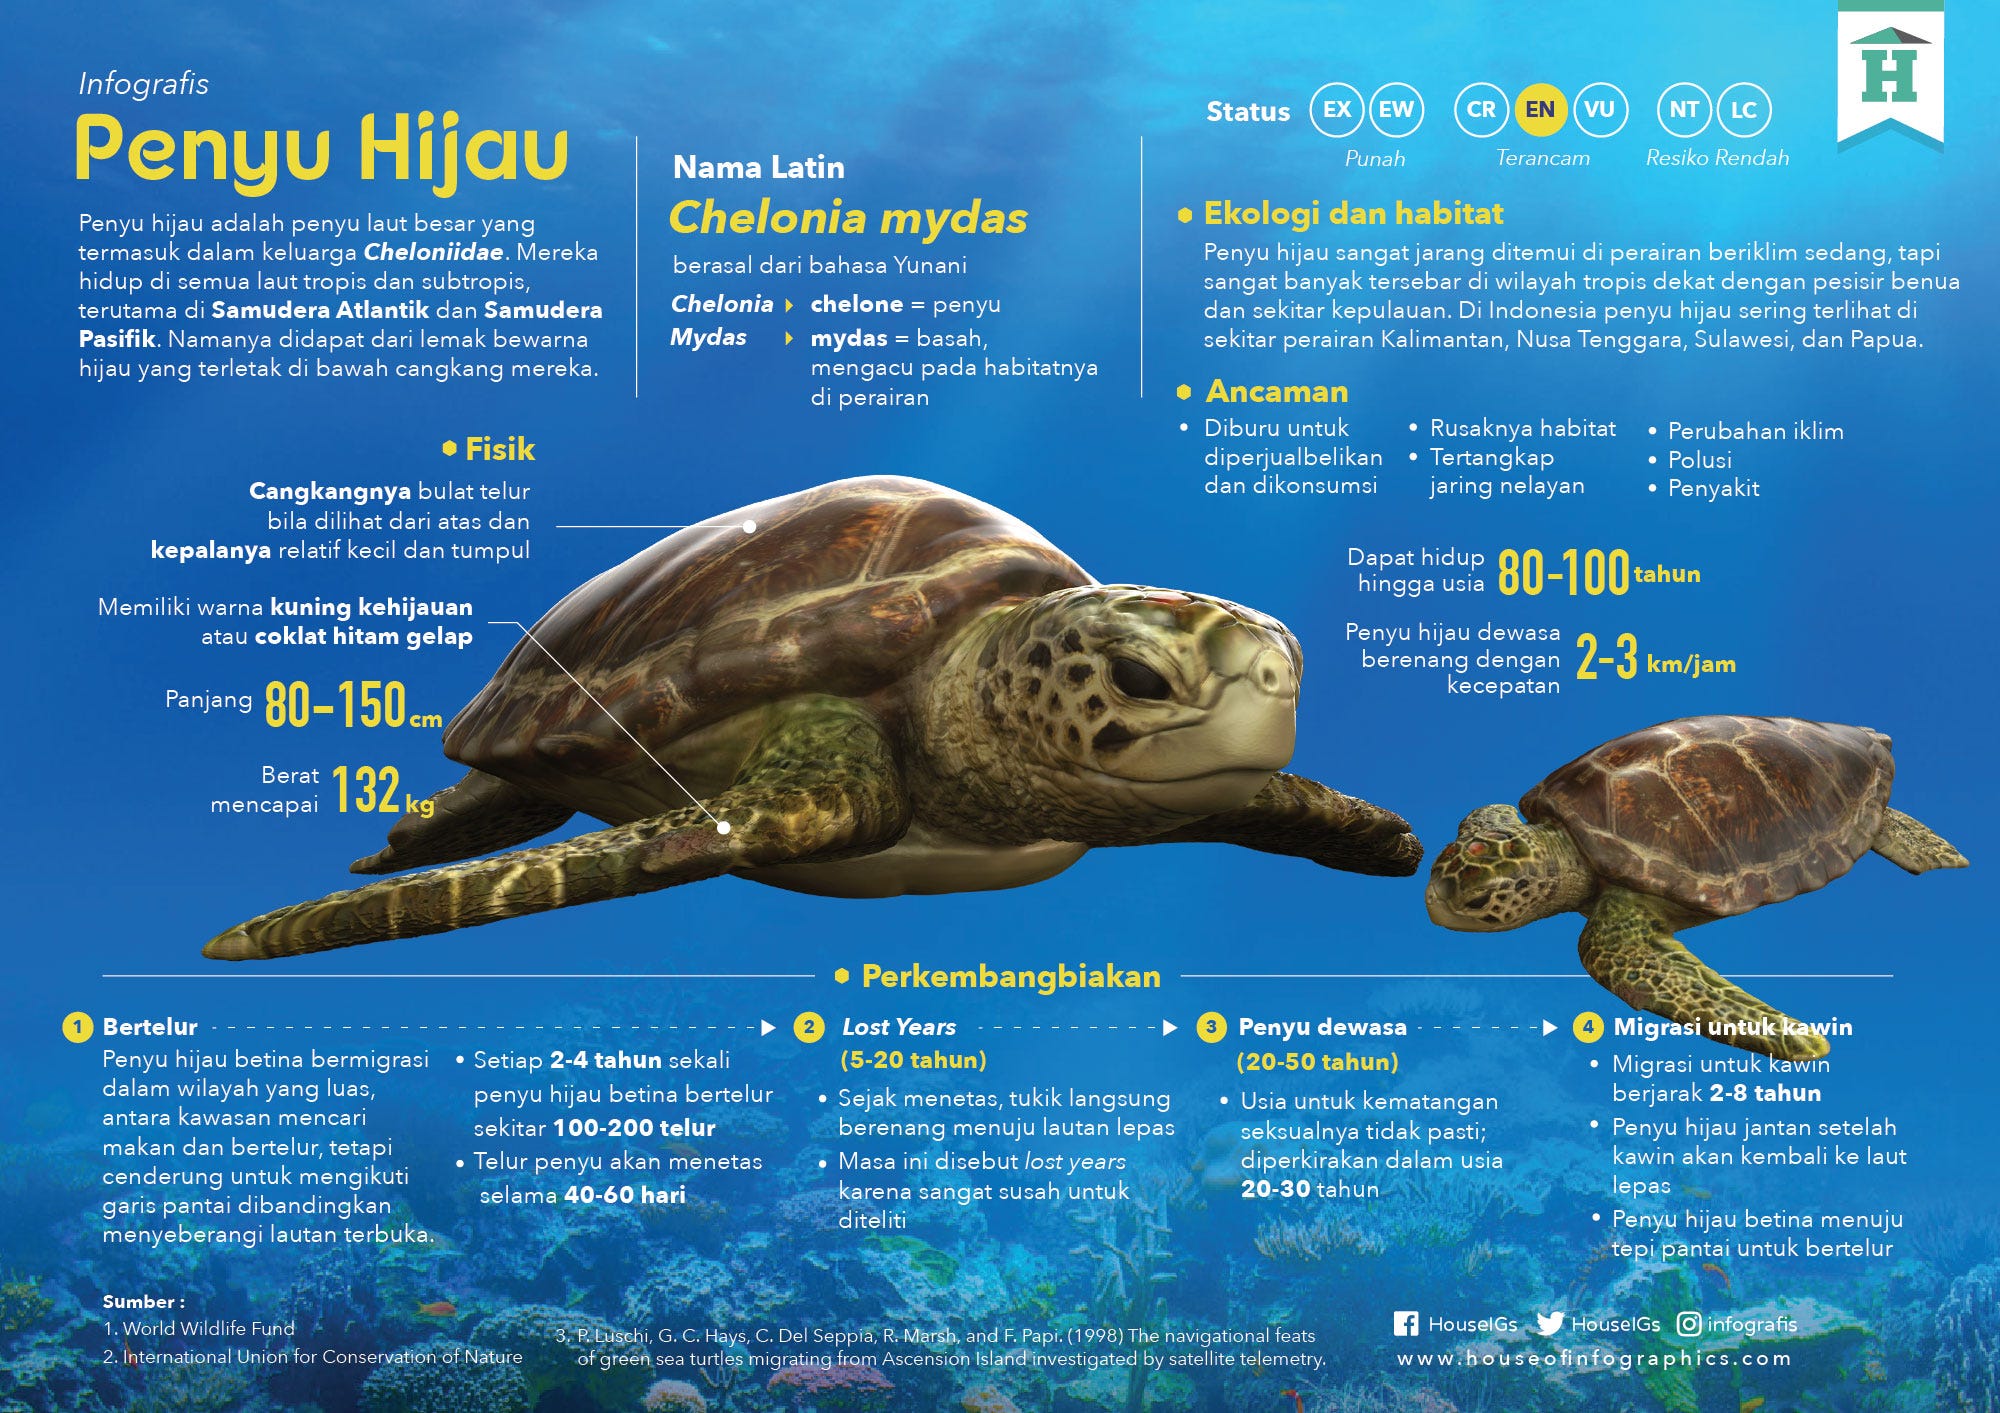 Infografis Penyu Hijau oleh House of Infographics